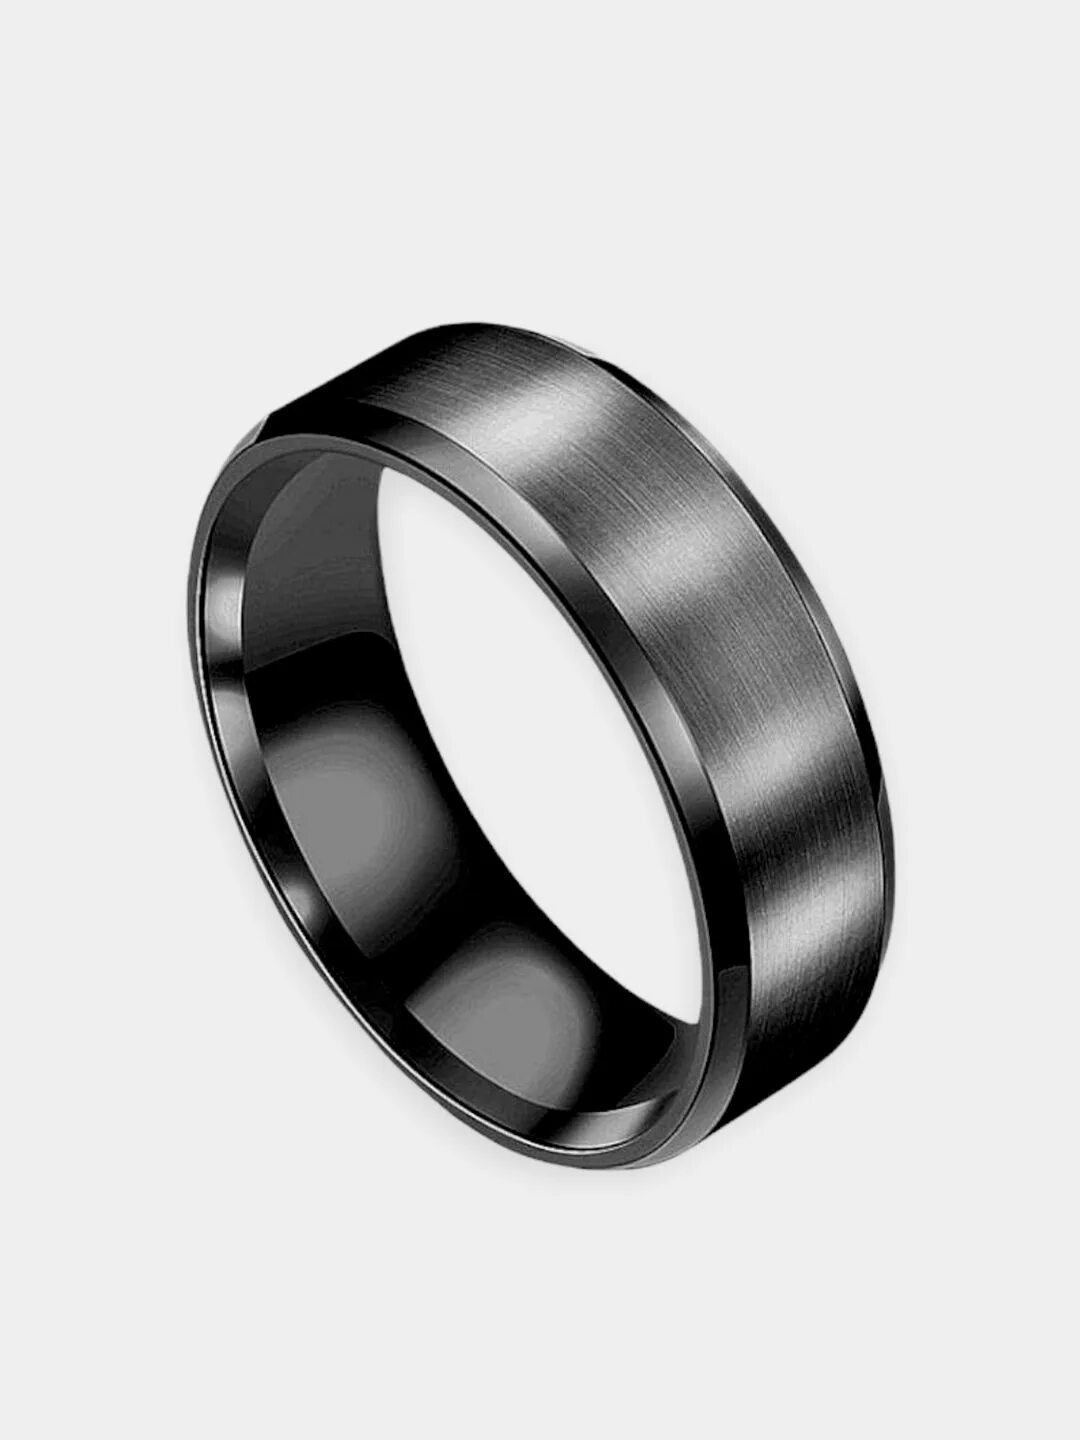 Stainless Steel кольцо мужское. Кольцо нержавеющая сталь 8мм. Tokyo Revengers кольцо. Титановые кольца.